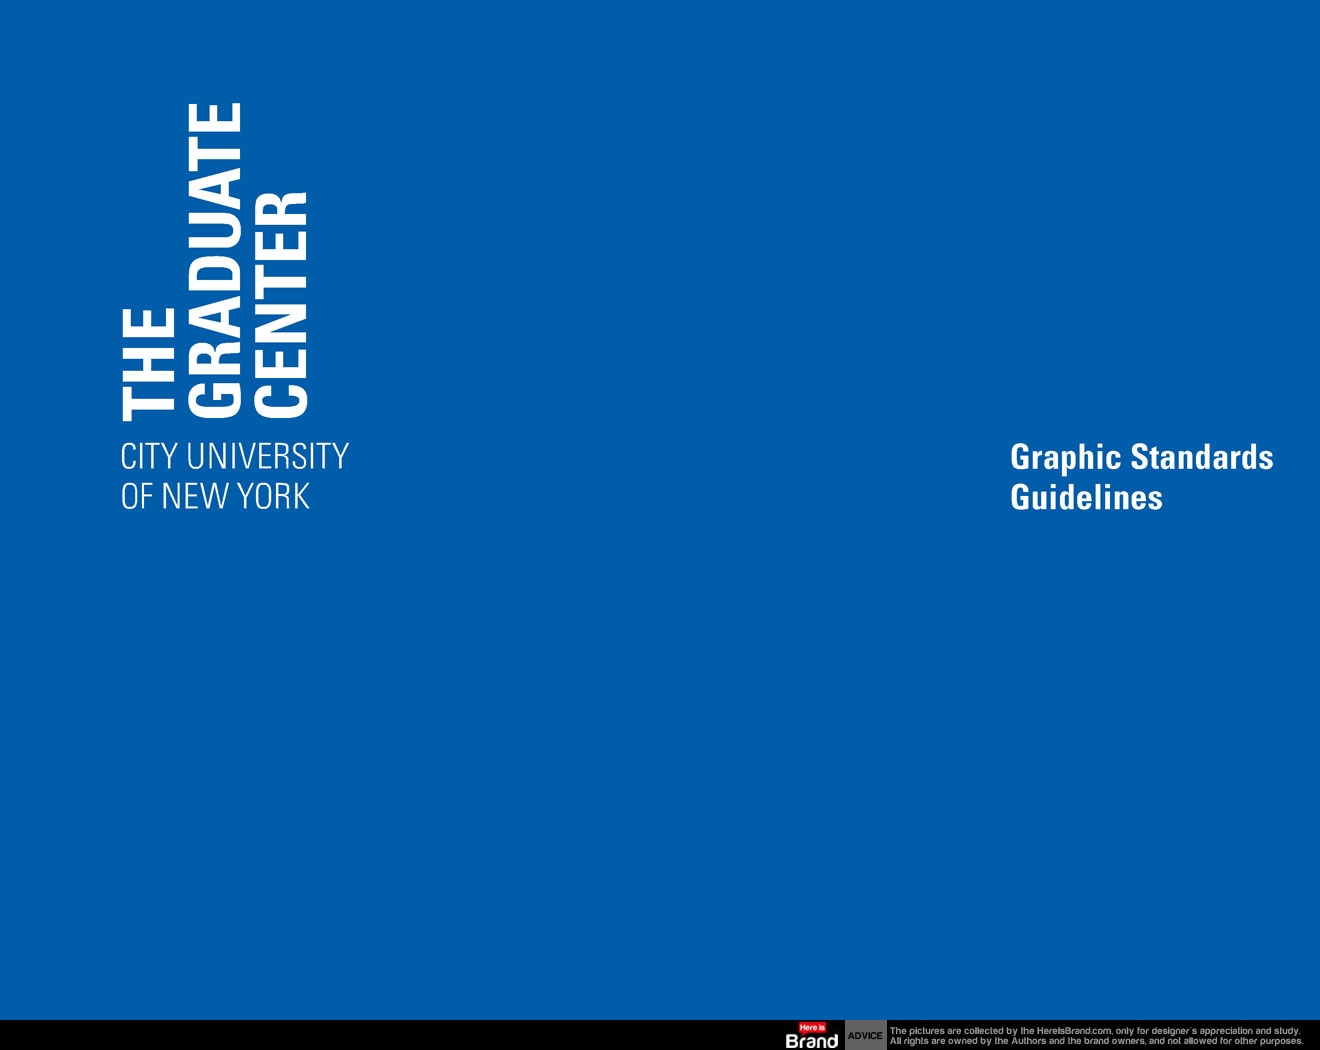 Graduate Center City University of New York identity guidelines